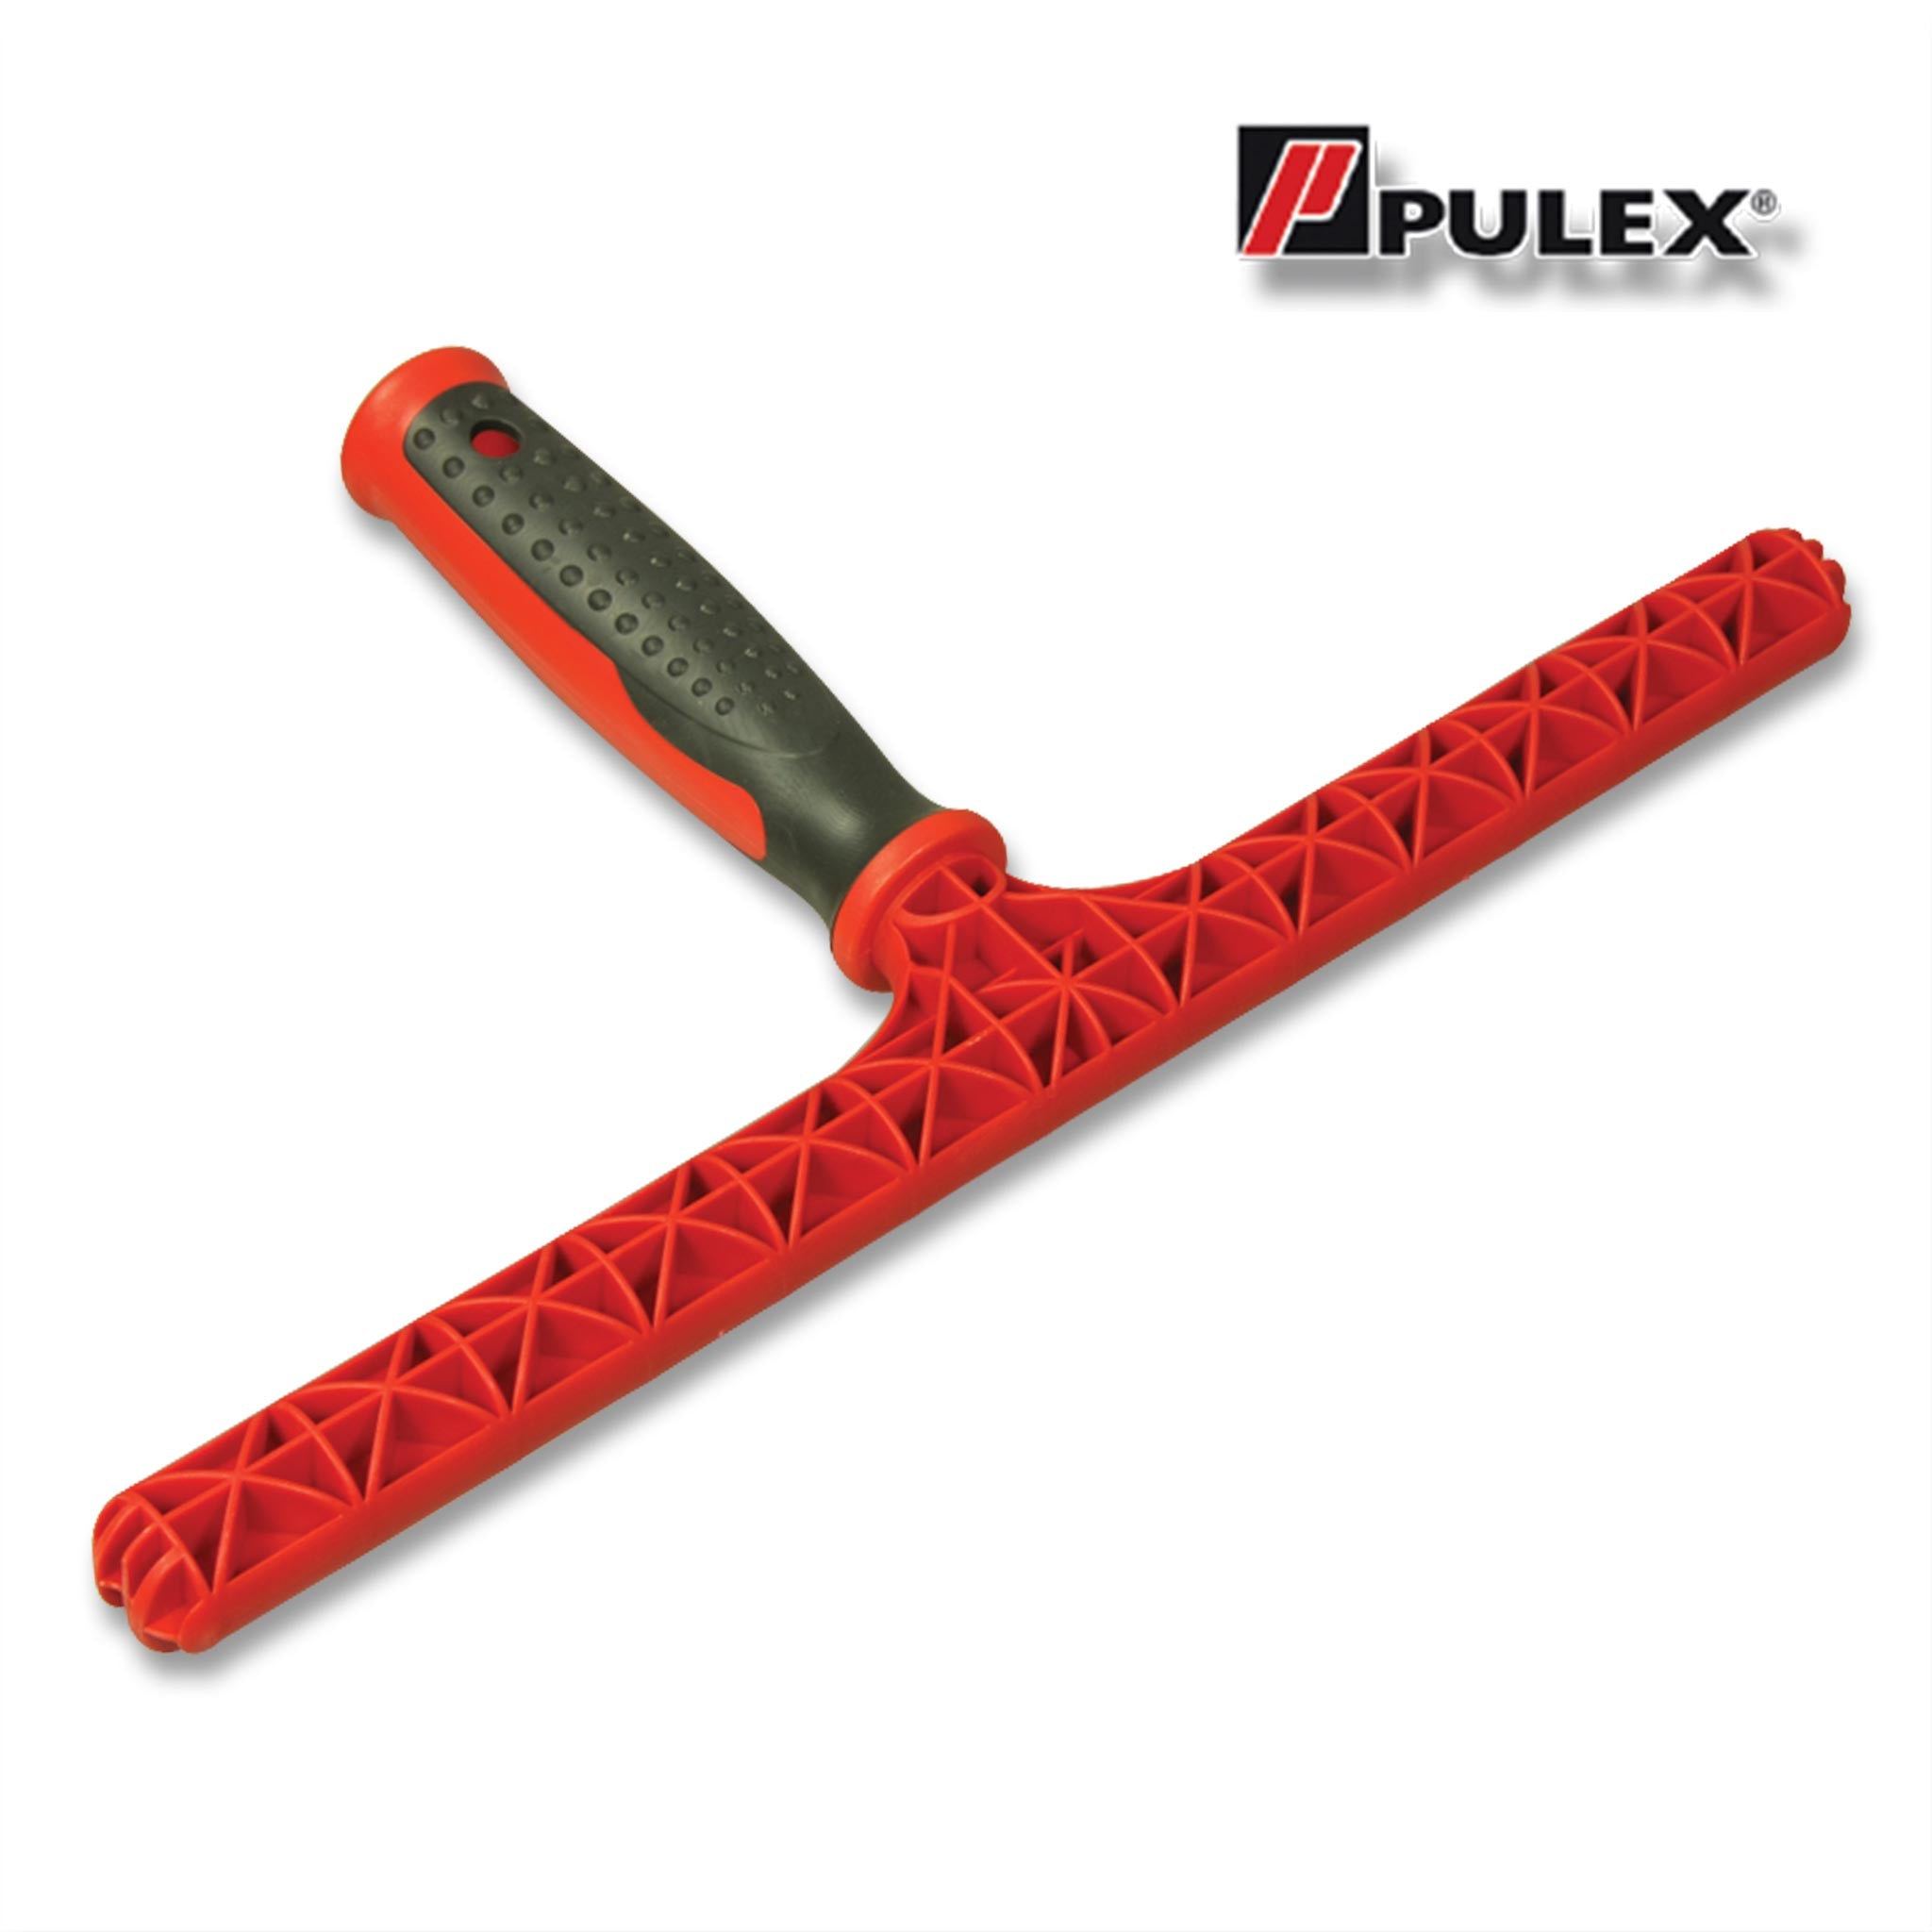 Pulex Technolite T Bar Applicator Frame